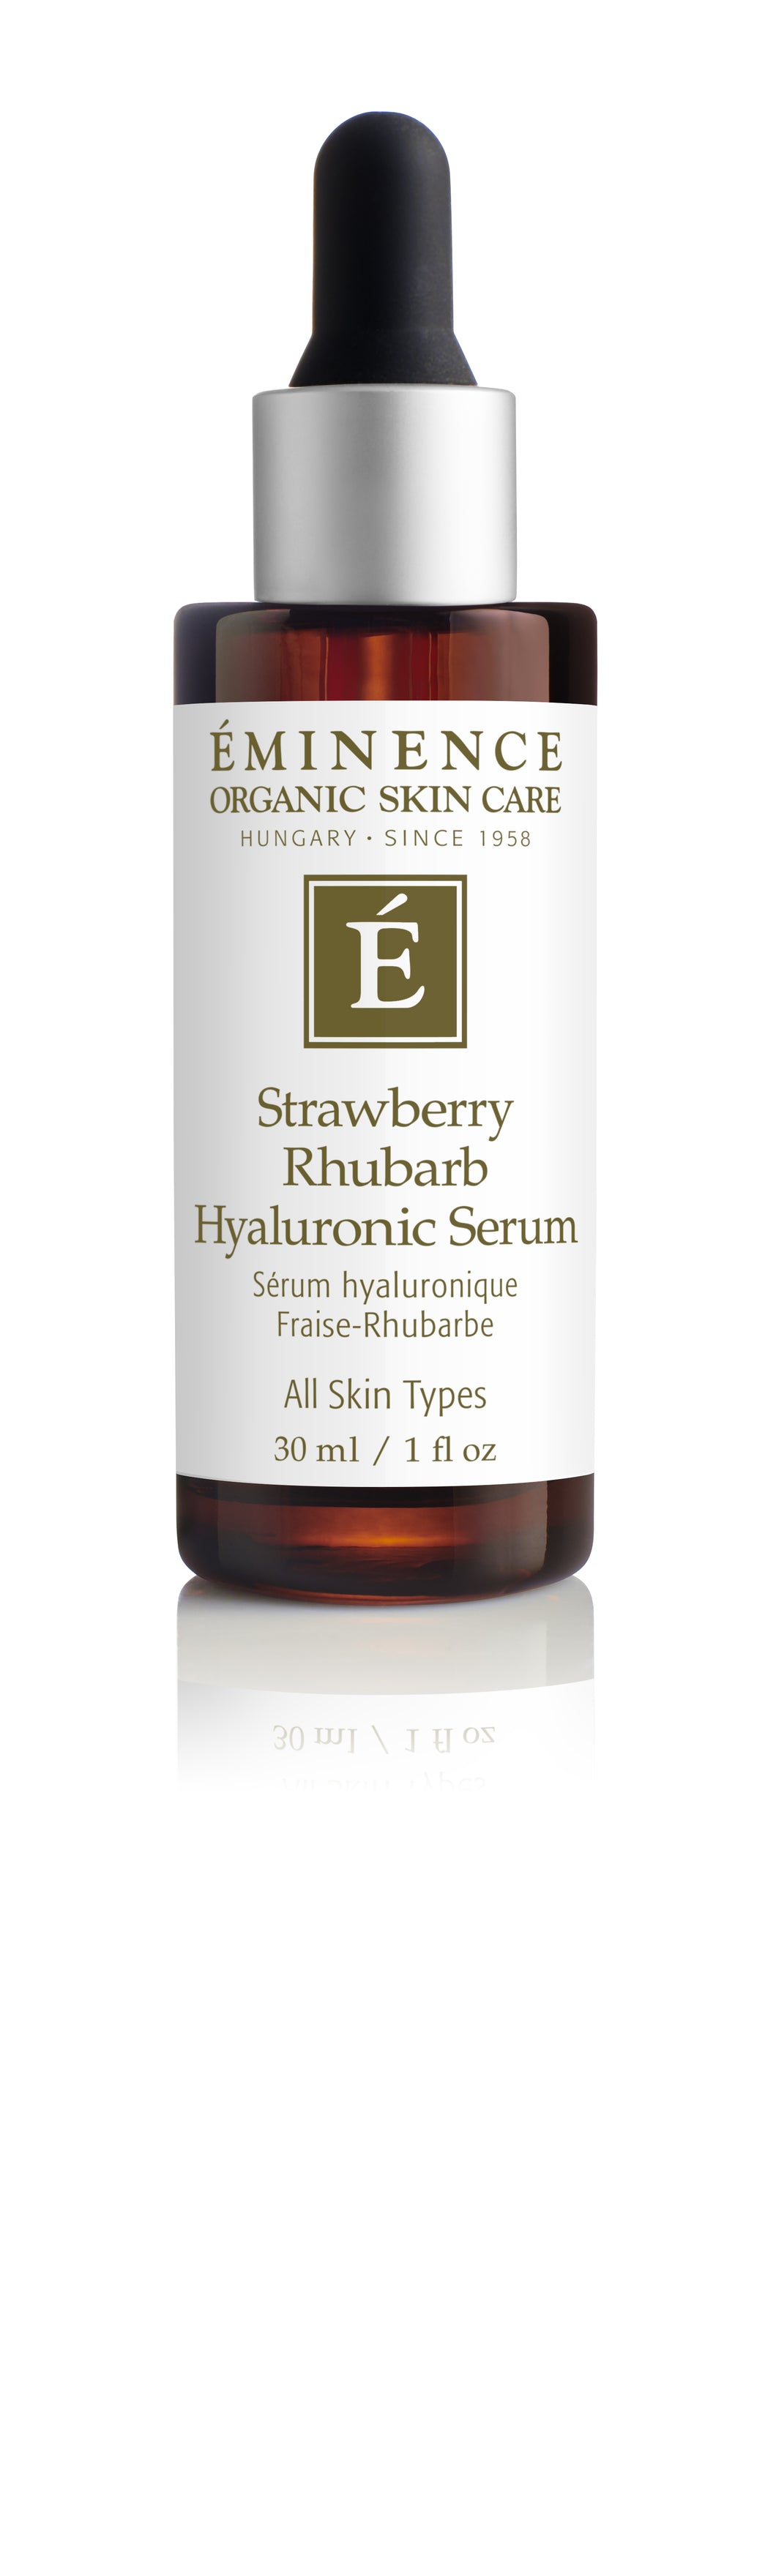 Eminence: Strawberry Rhubarb Hyaluronic Serum